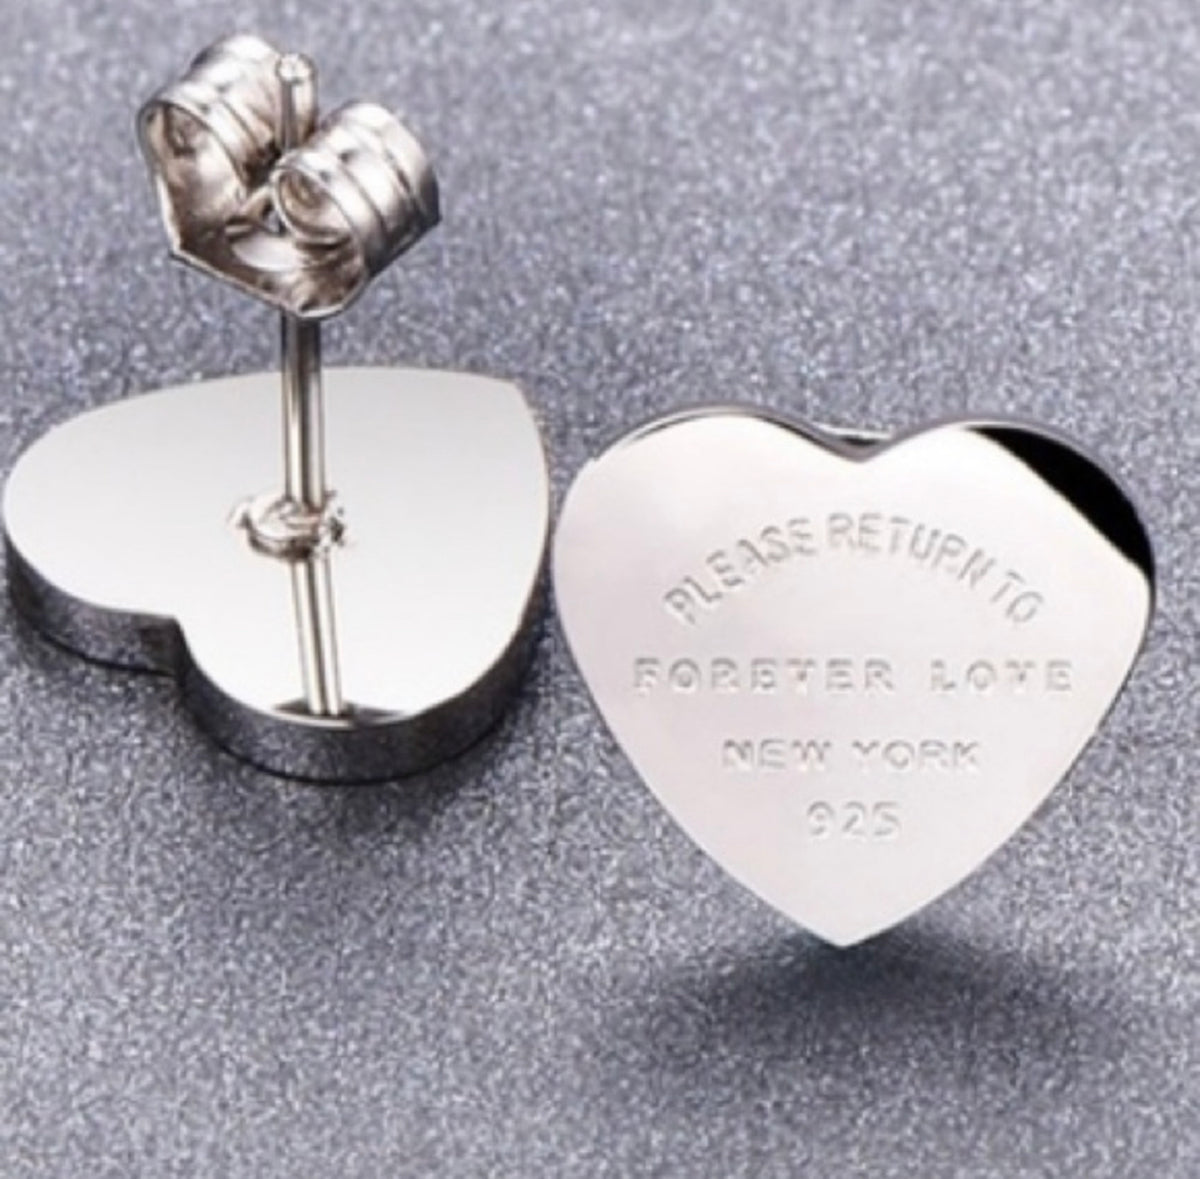 Please Return to Forever Love Heart Tag Earrings